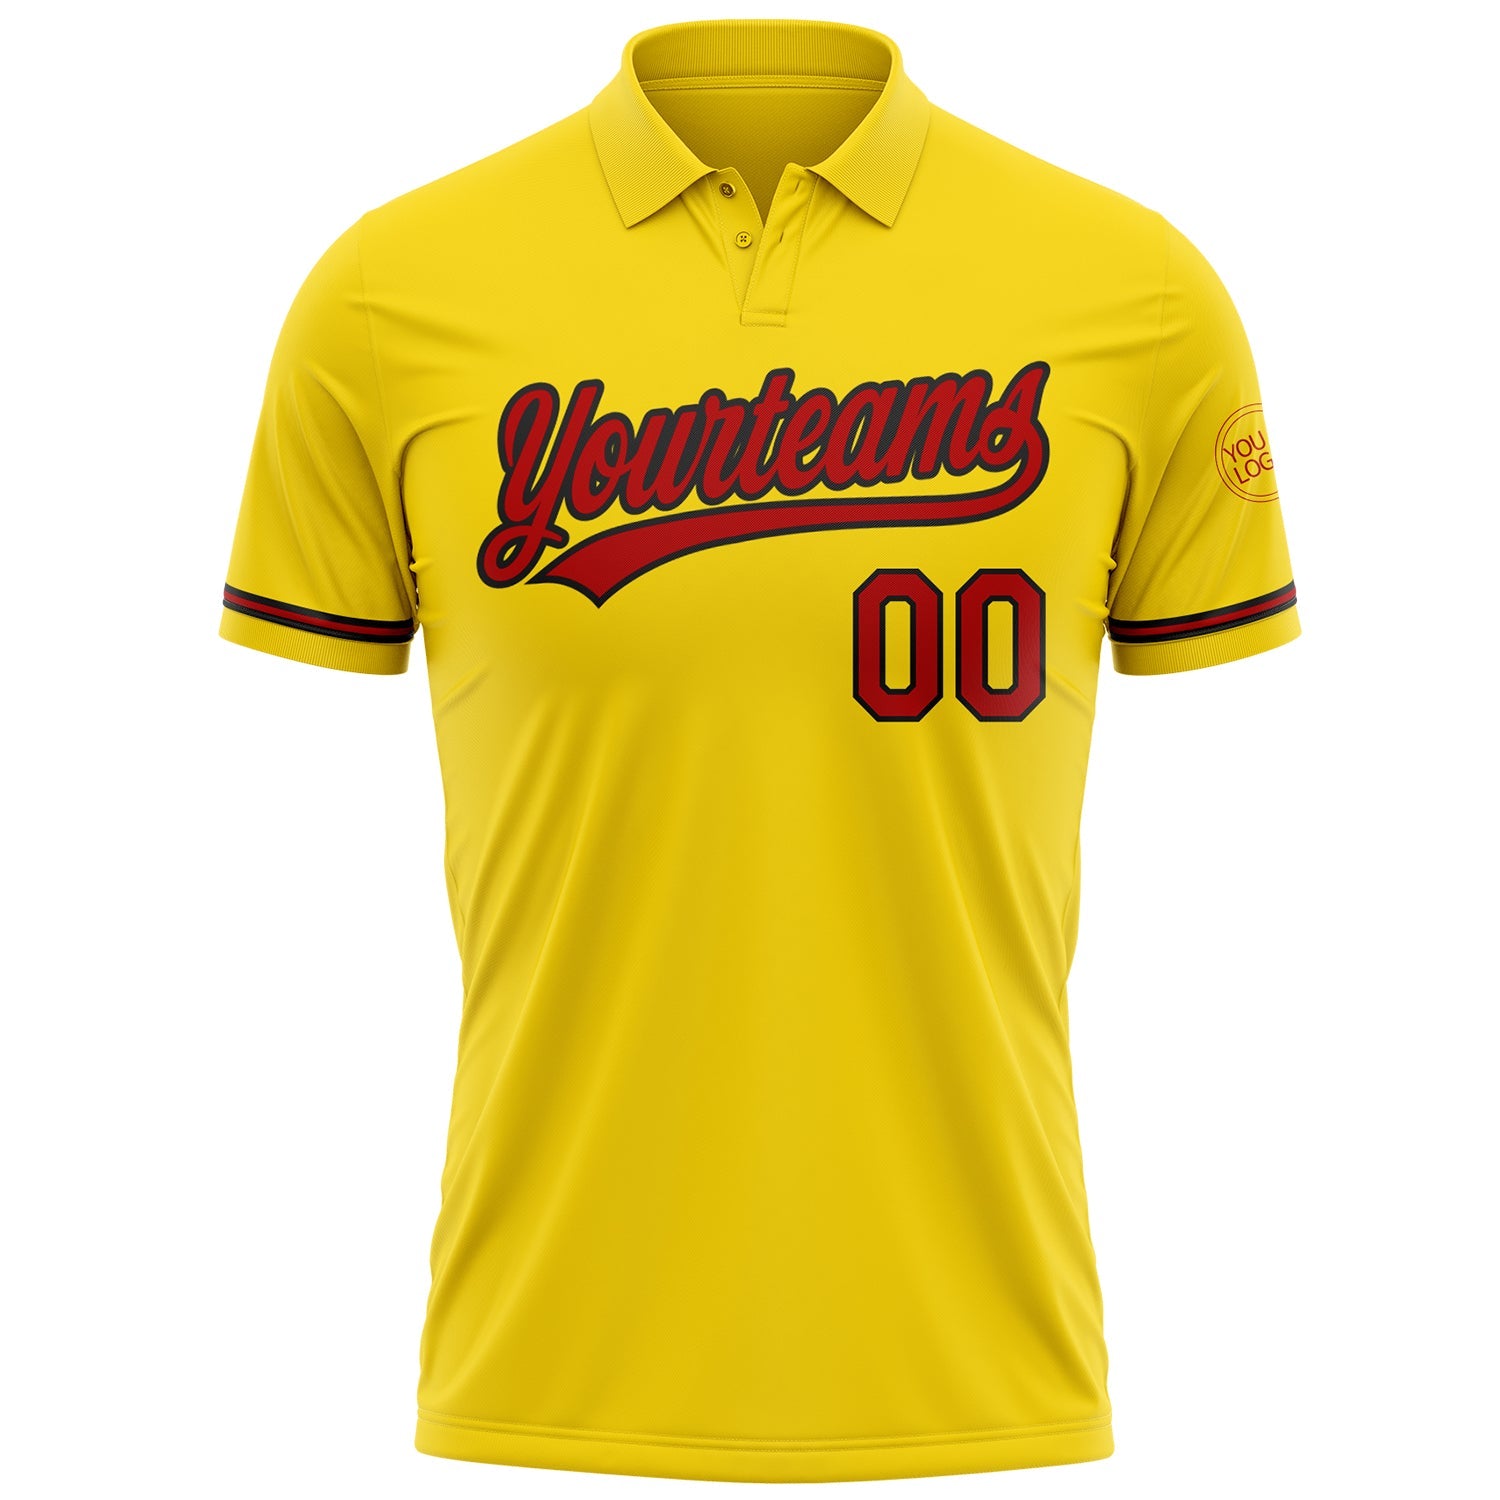 Camisa pólo de golfe Vapor de desempenho amarelo vermelho-preto personalizado